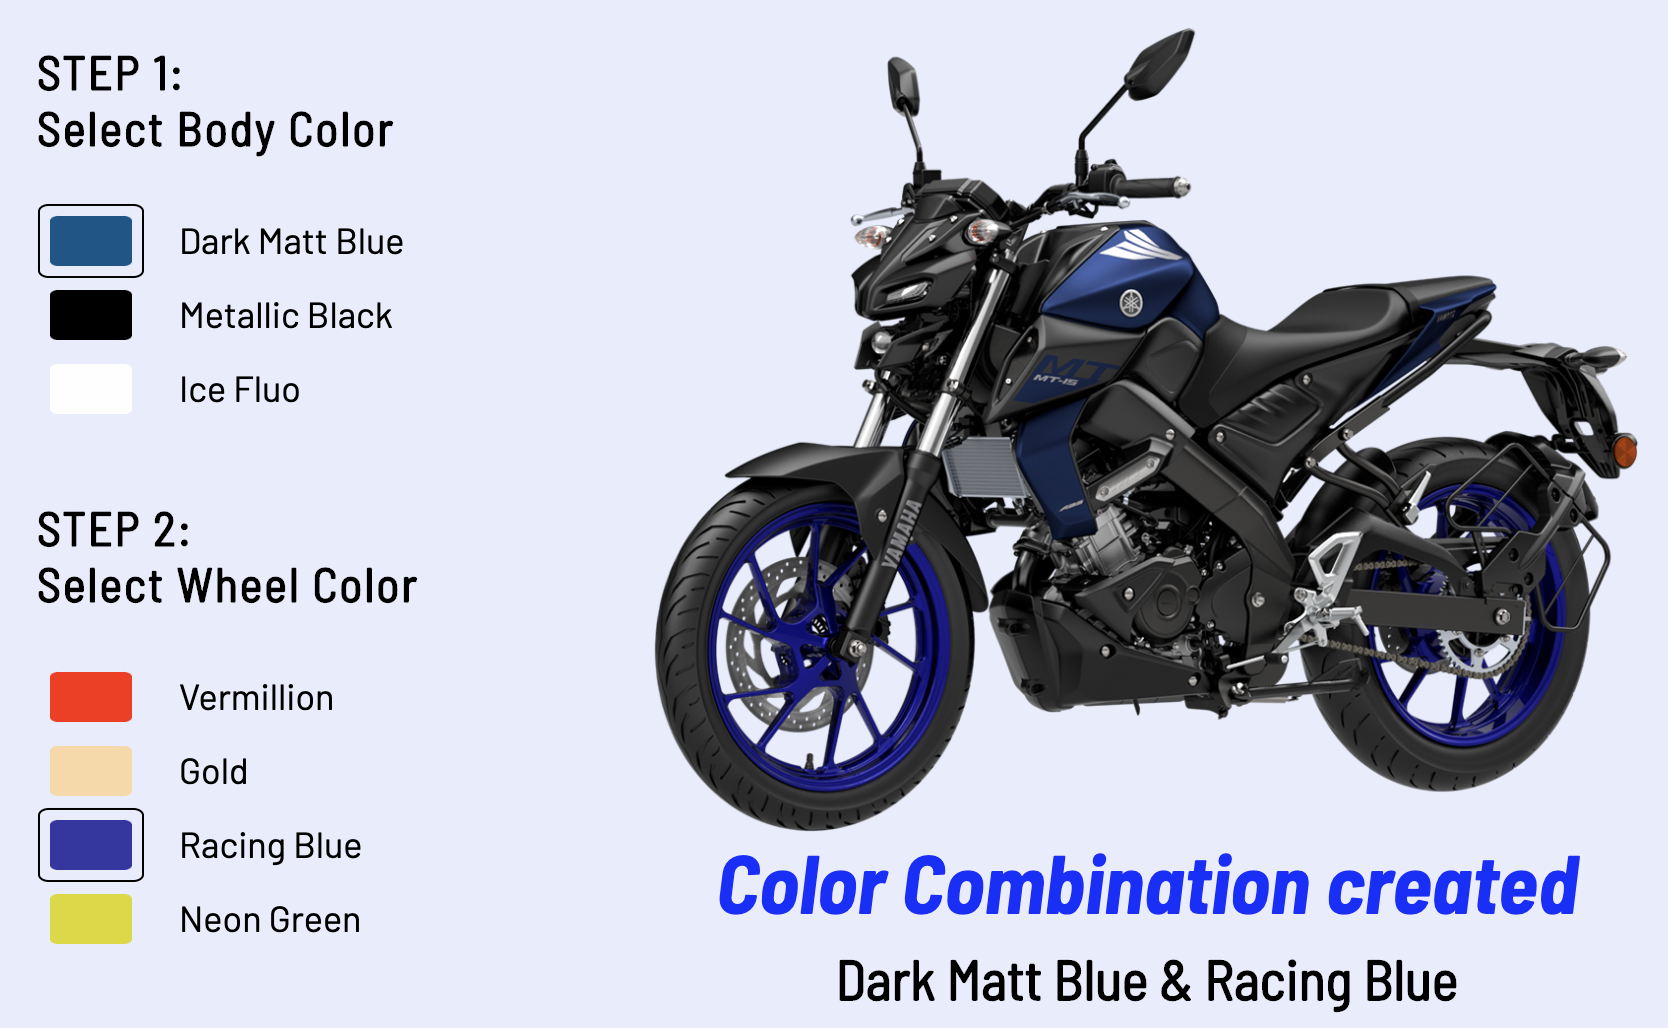 Dark Matte Blue and Racing Blue